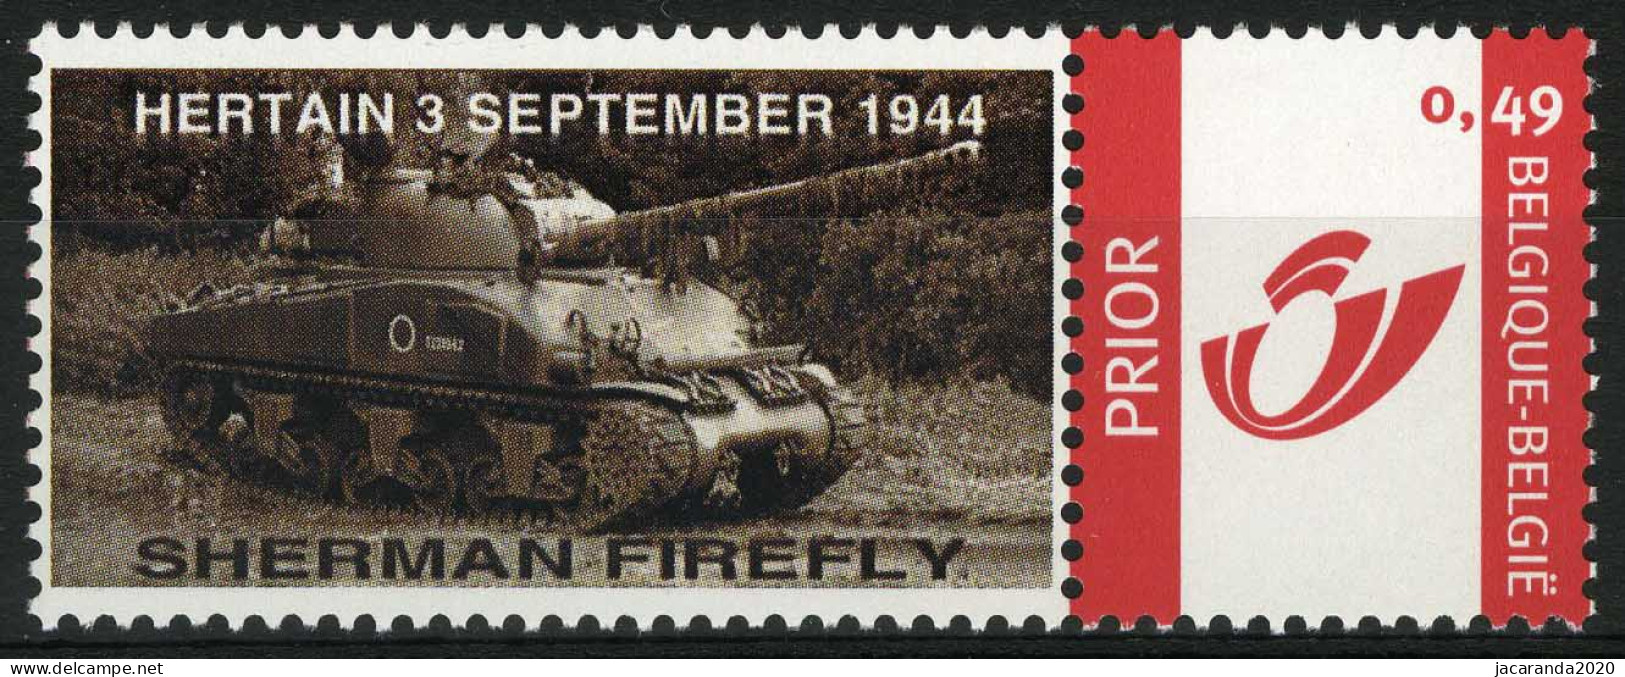 België 3183 - Duostamp - Shireman Firefly - Oorlog - Tank - Hertain 3 September 1944 - Ungebraucht